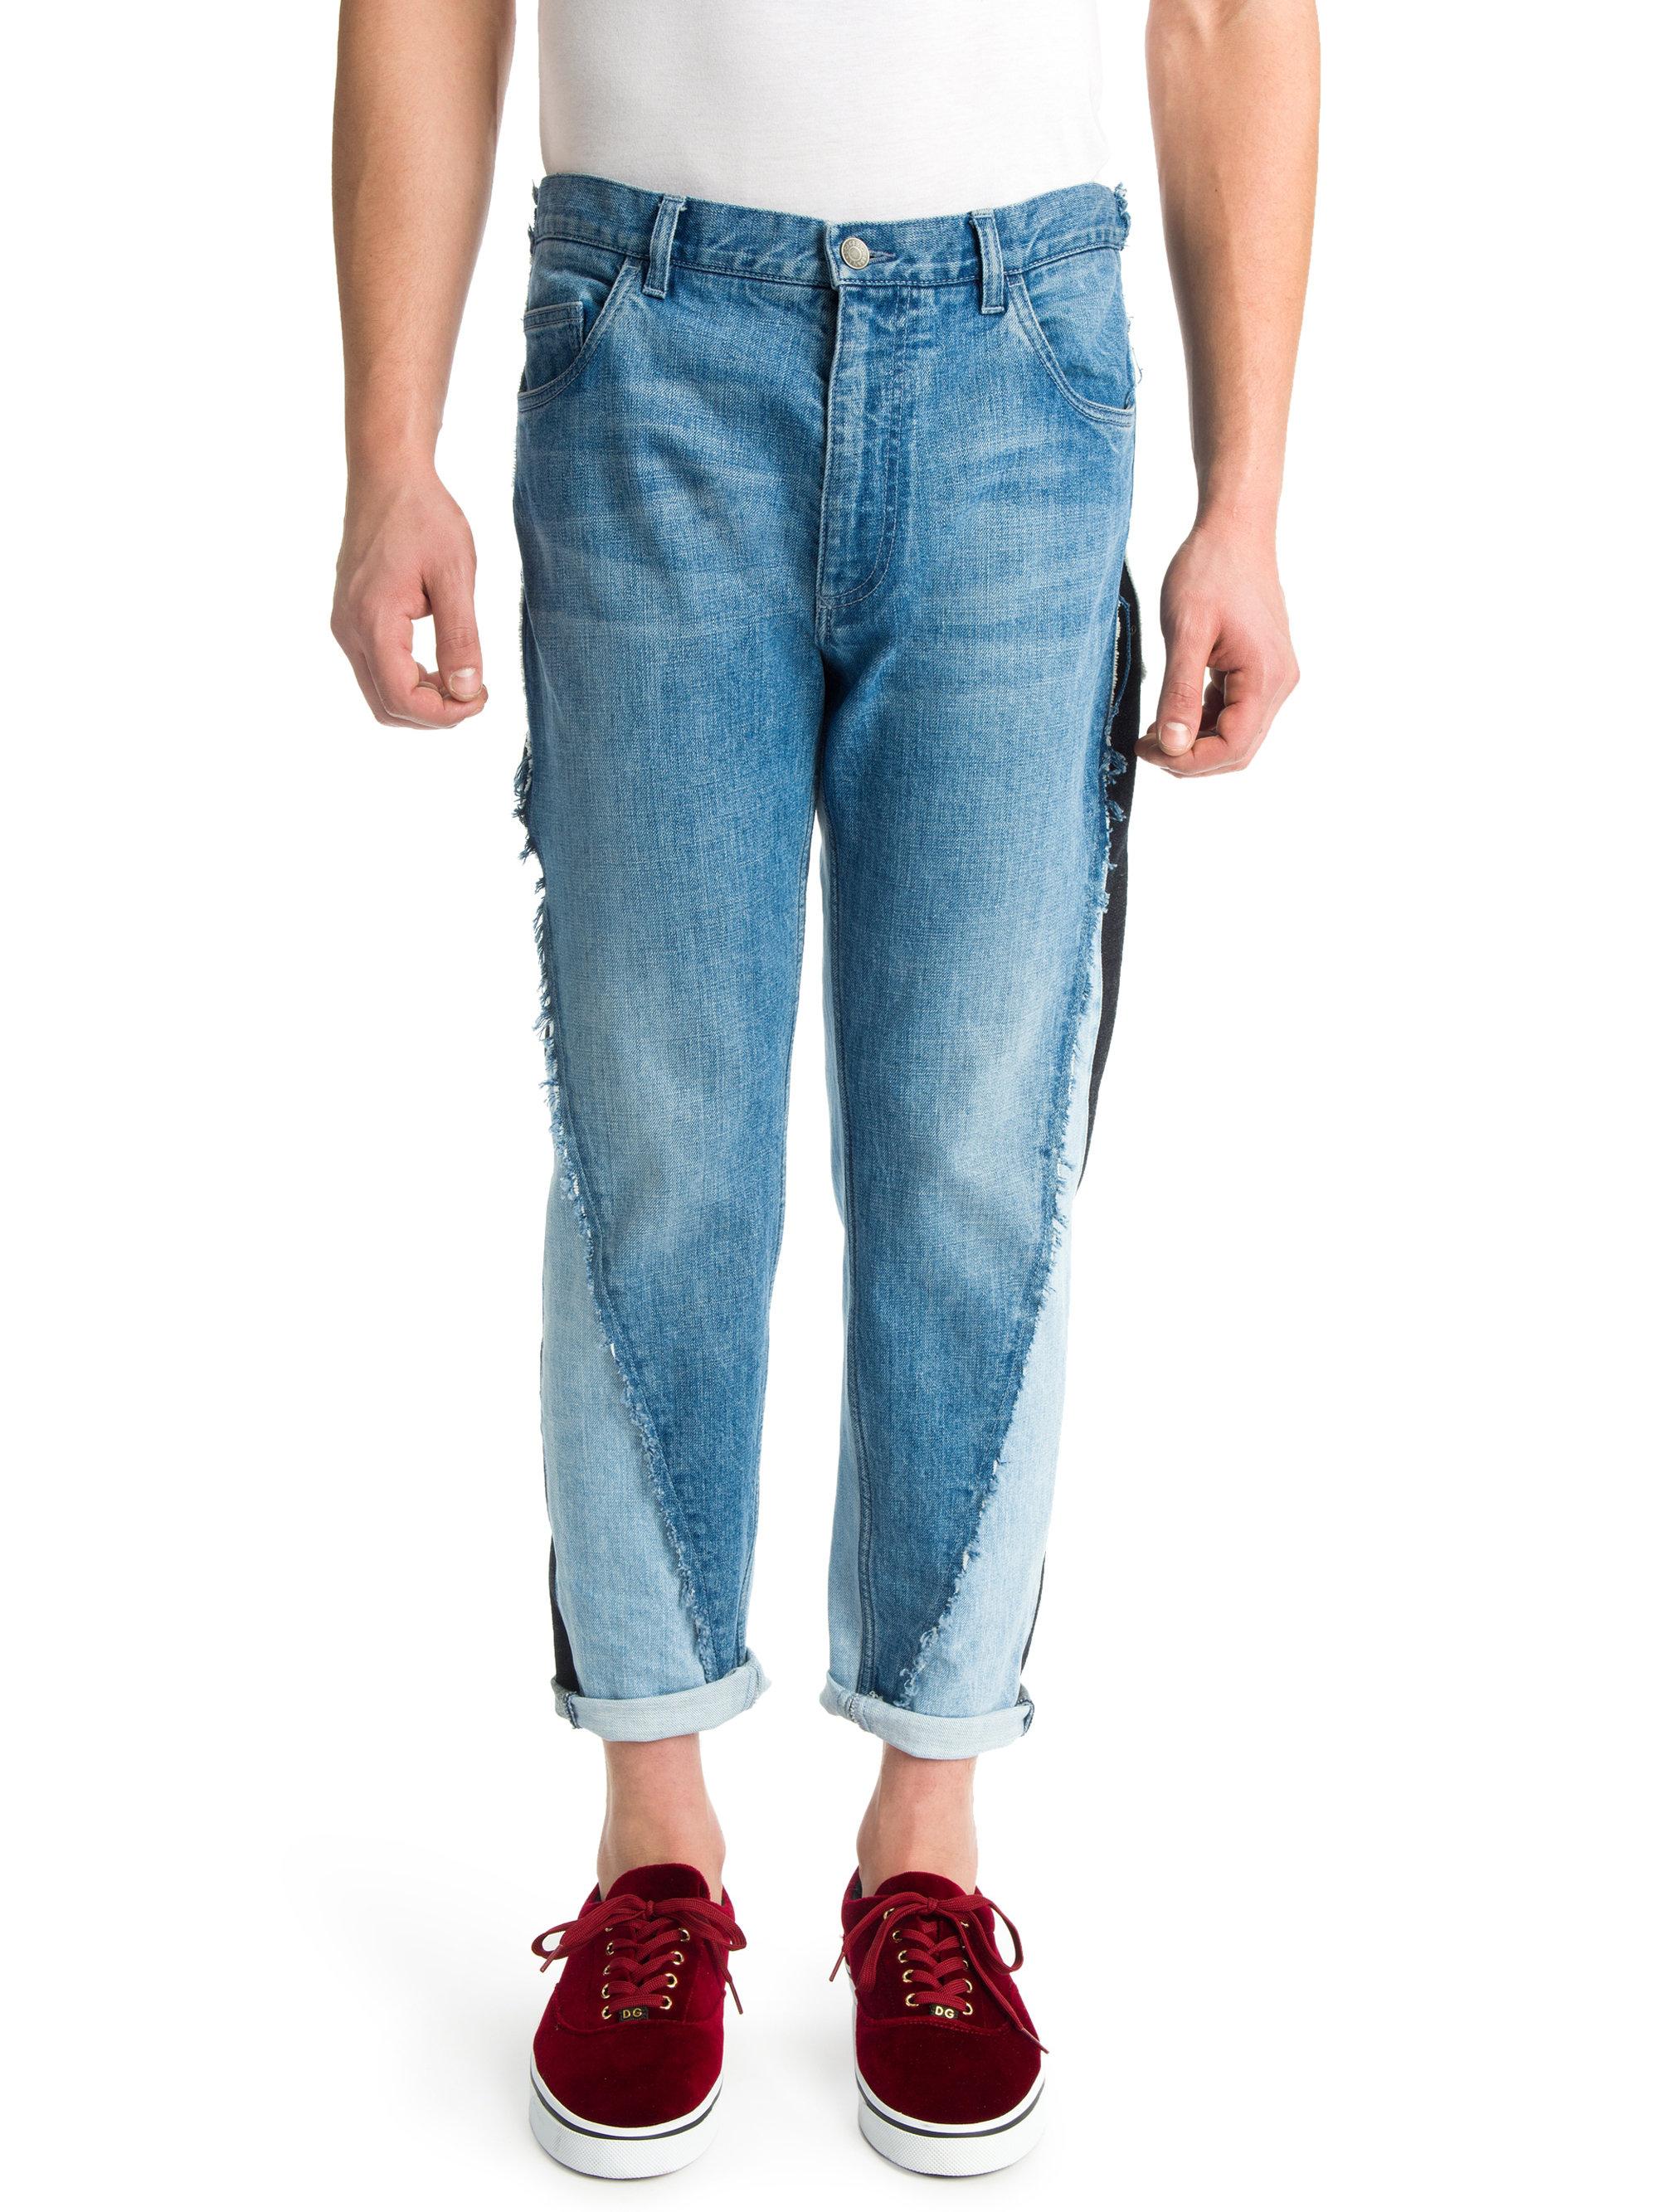 Lyst - Dolce & Gabbana Dual Tone Straight Denim Jeans in Blue for Men